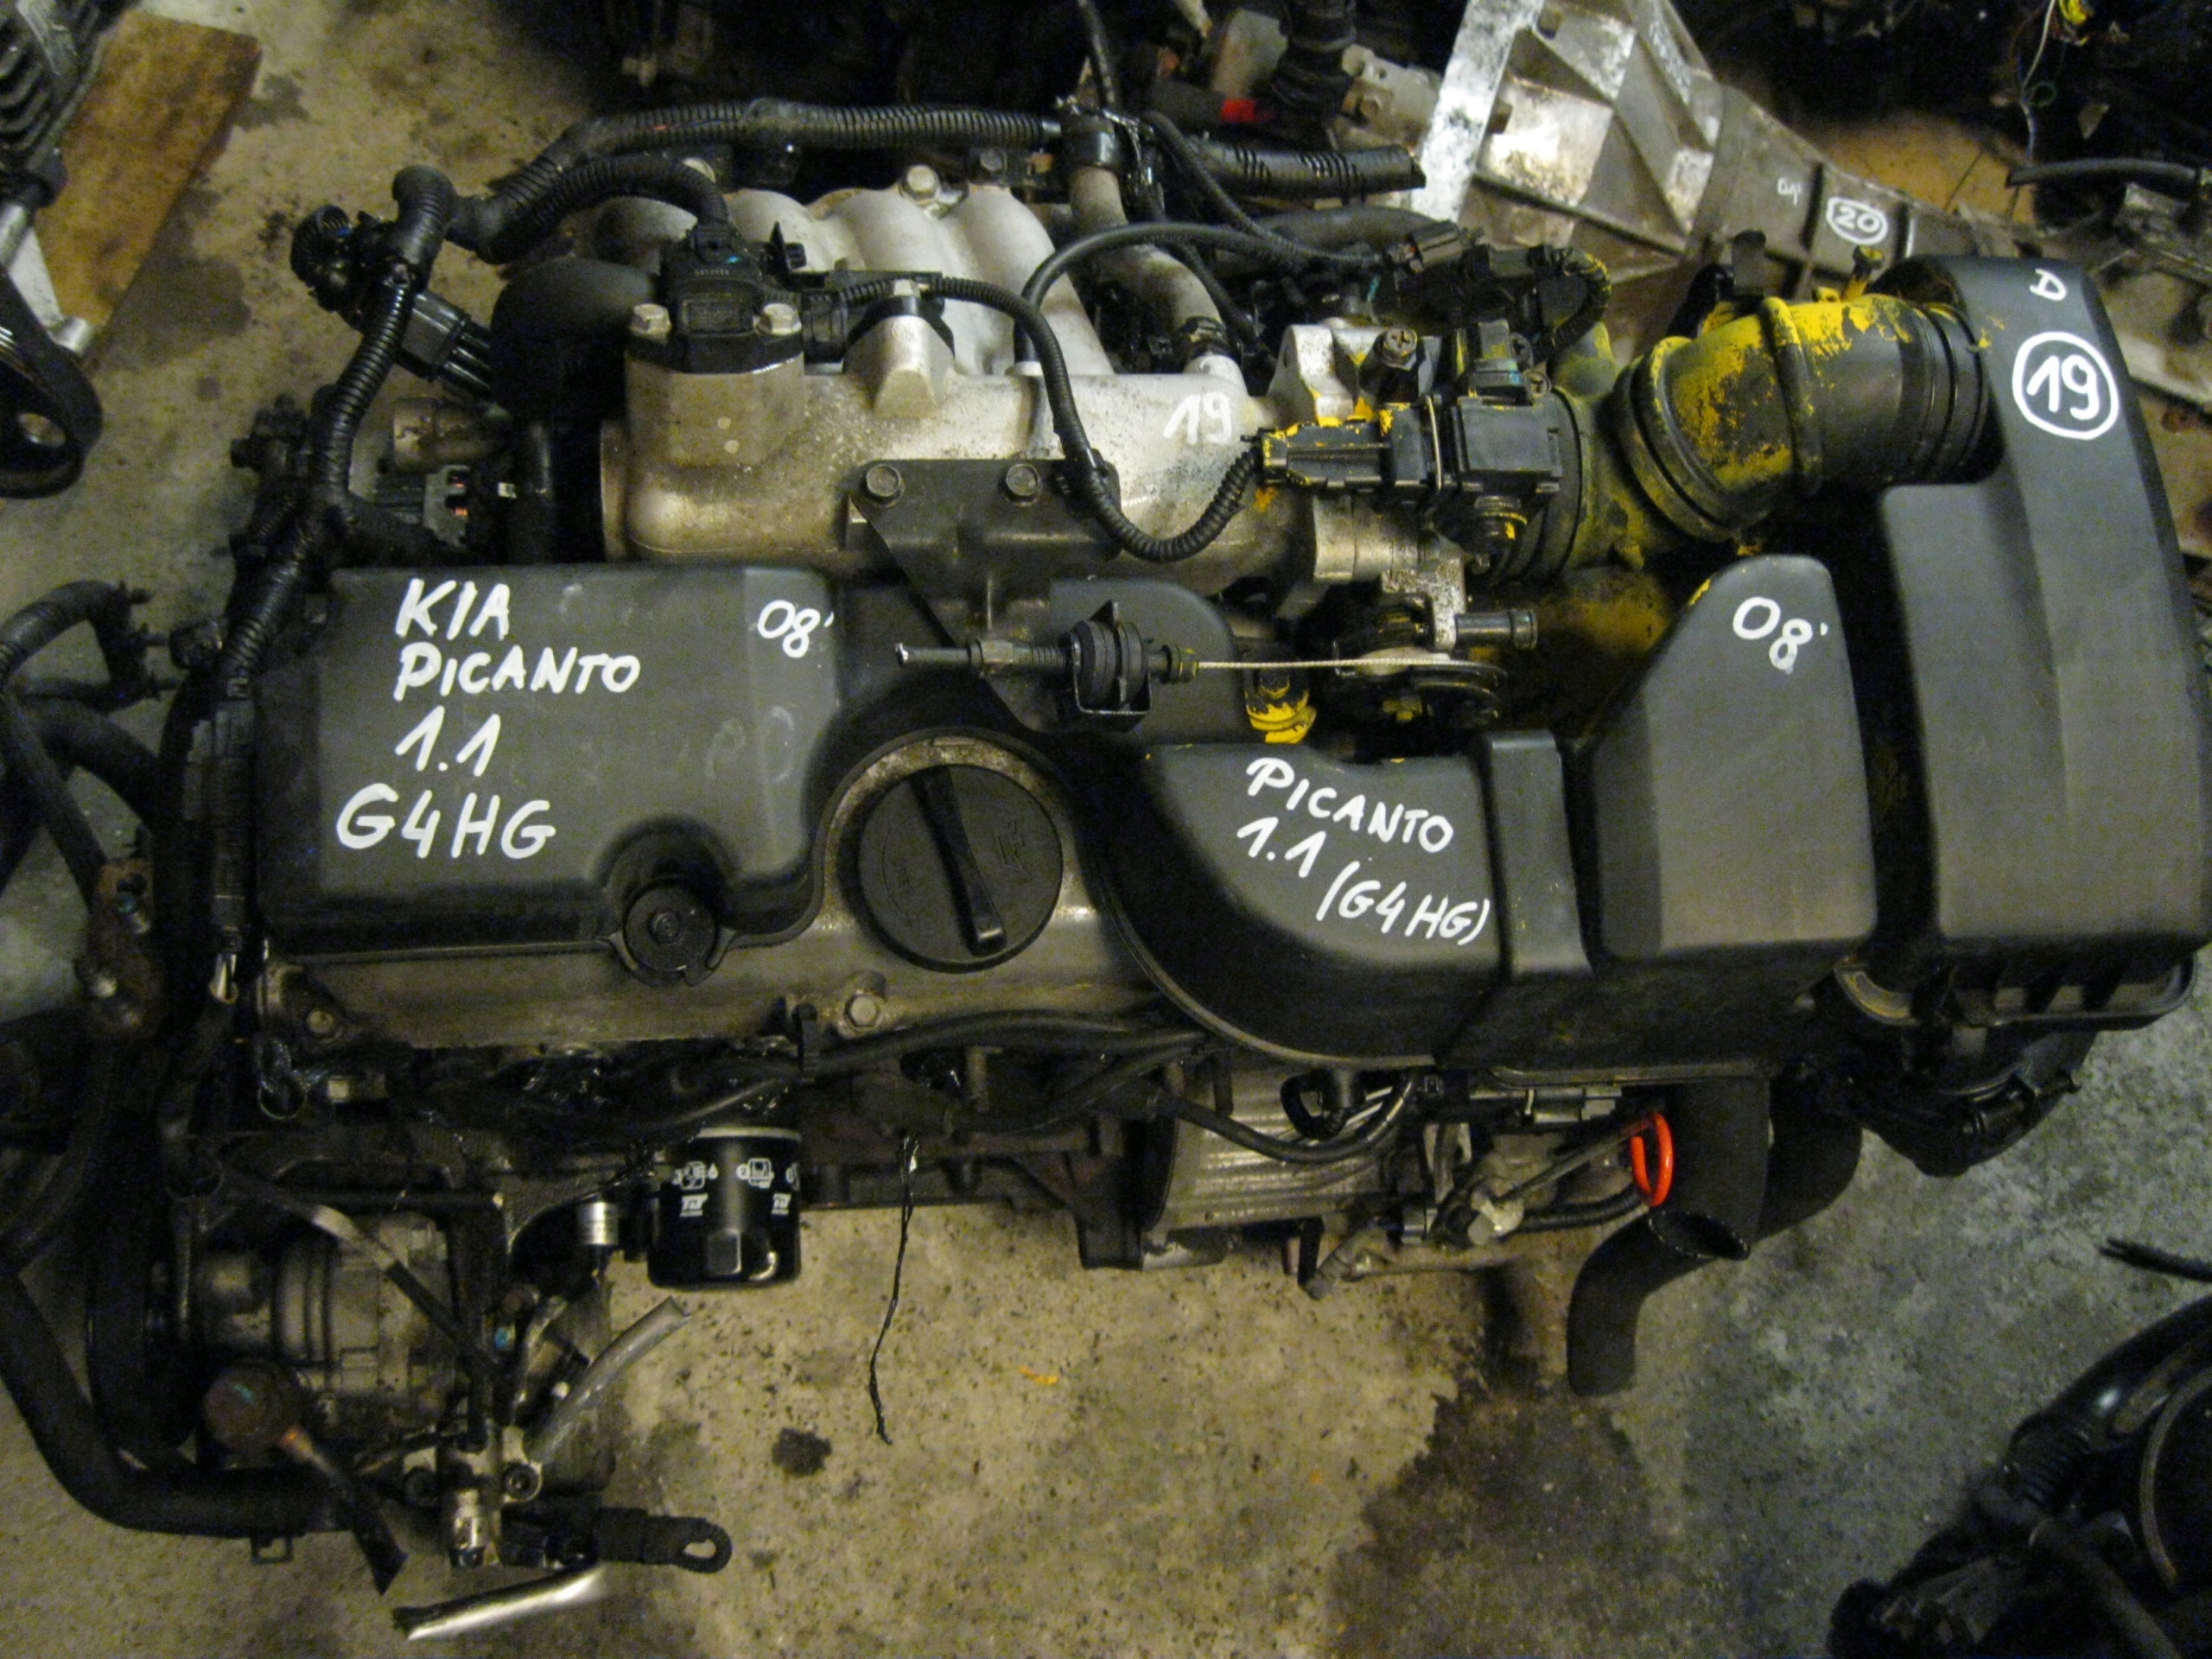 Engine G4hg 1 1 Kia Picanto Full Set Xdalys Lt